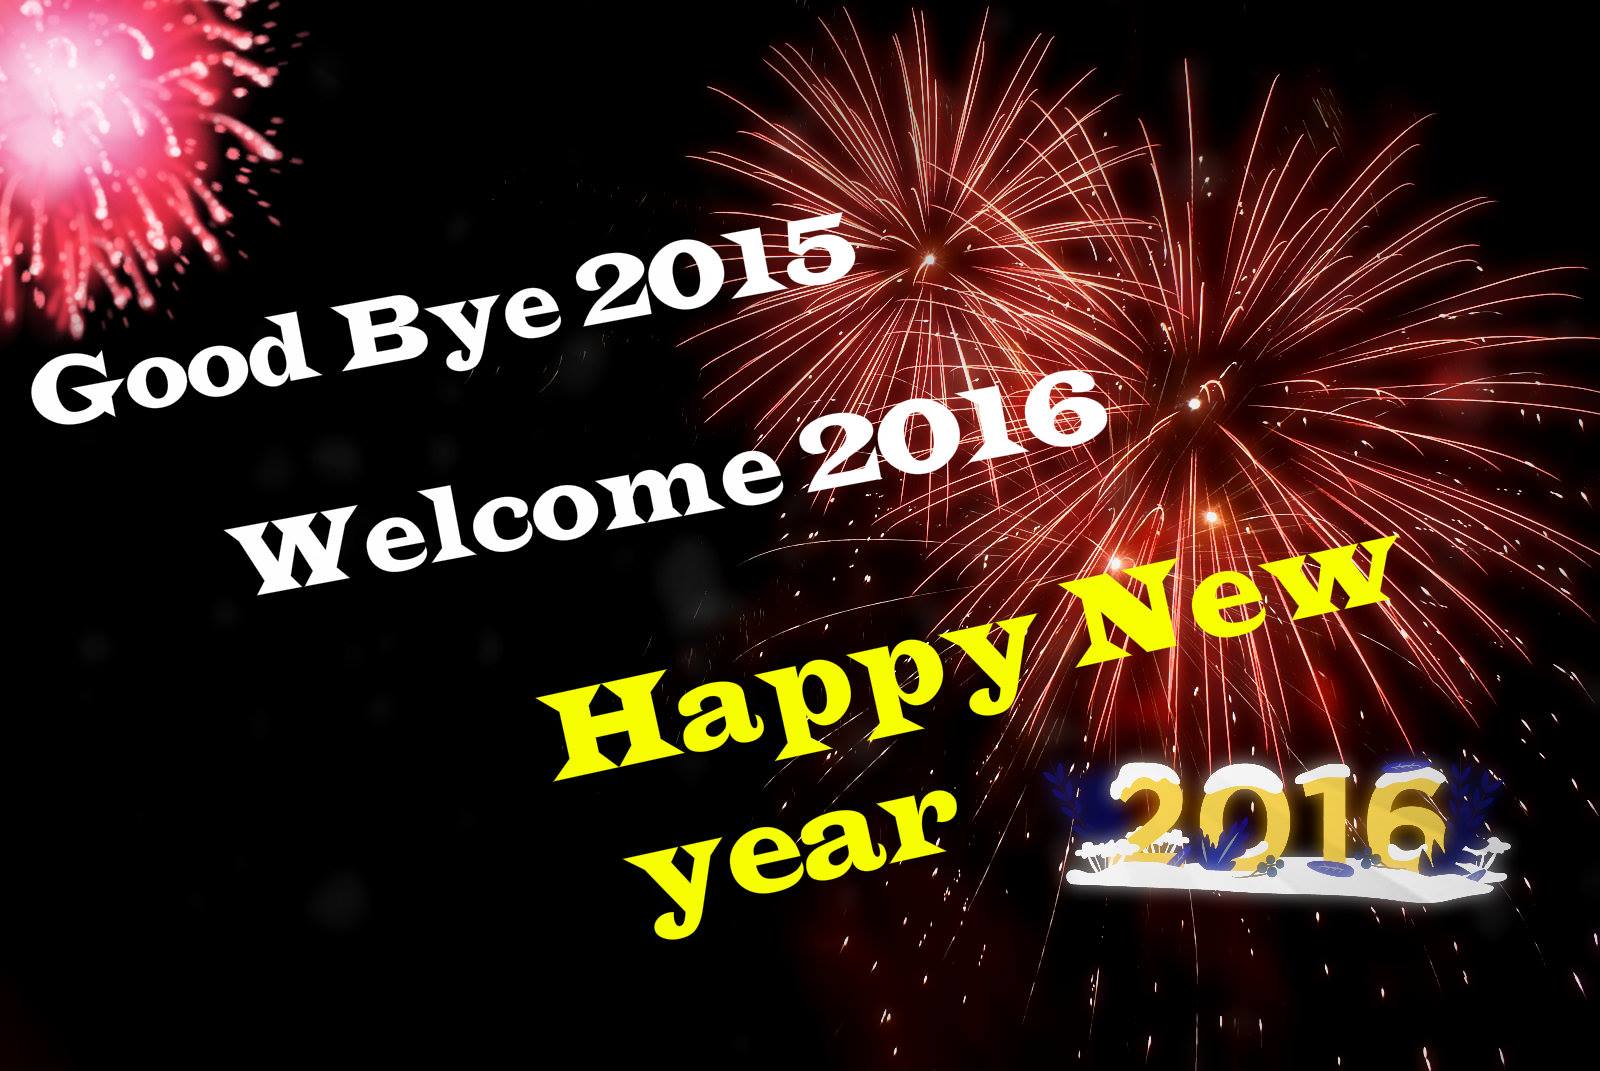 Good Bye 2015 Welcome 2016 Whatsapp FB Status Image Wallpaper